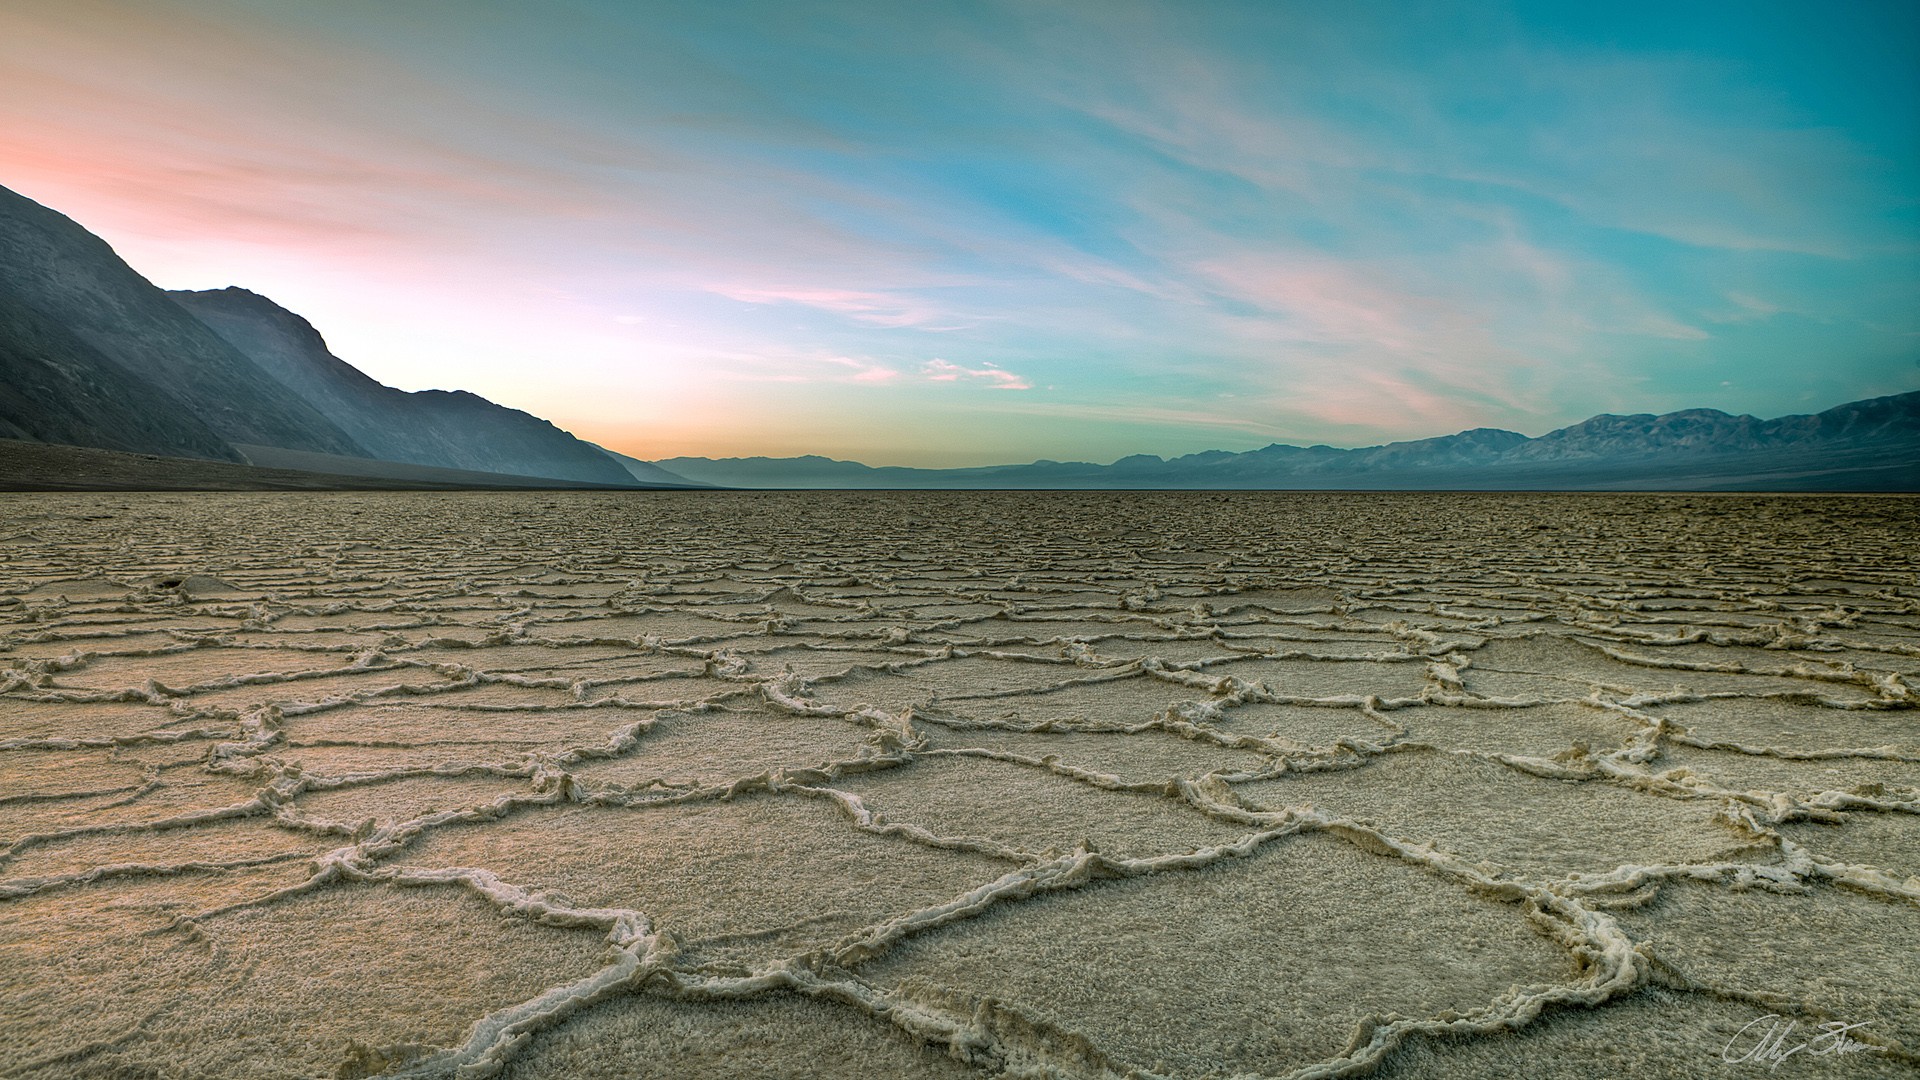 General 1920x1080 Death Valley California mountains desert nature landscape outdoors sky plains salt lakes